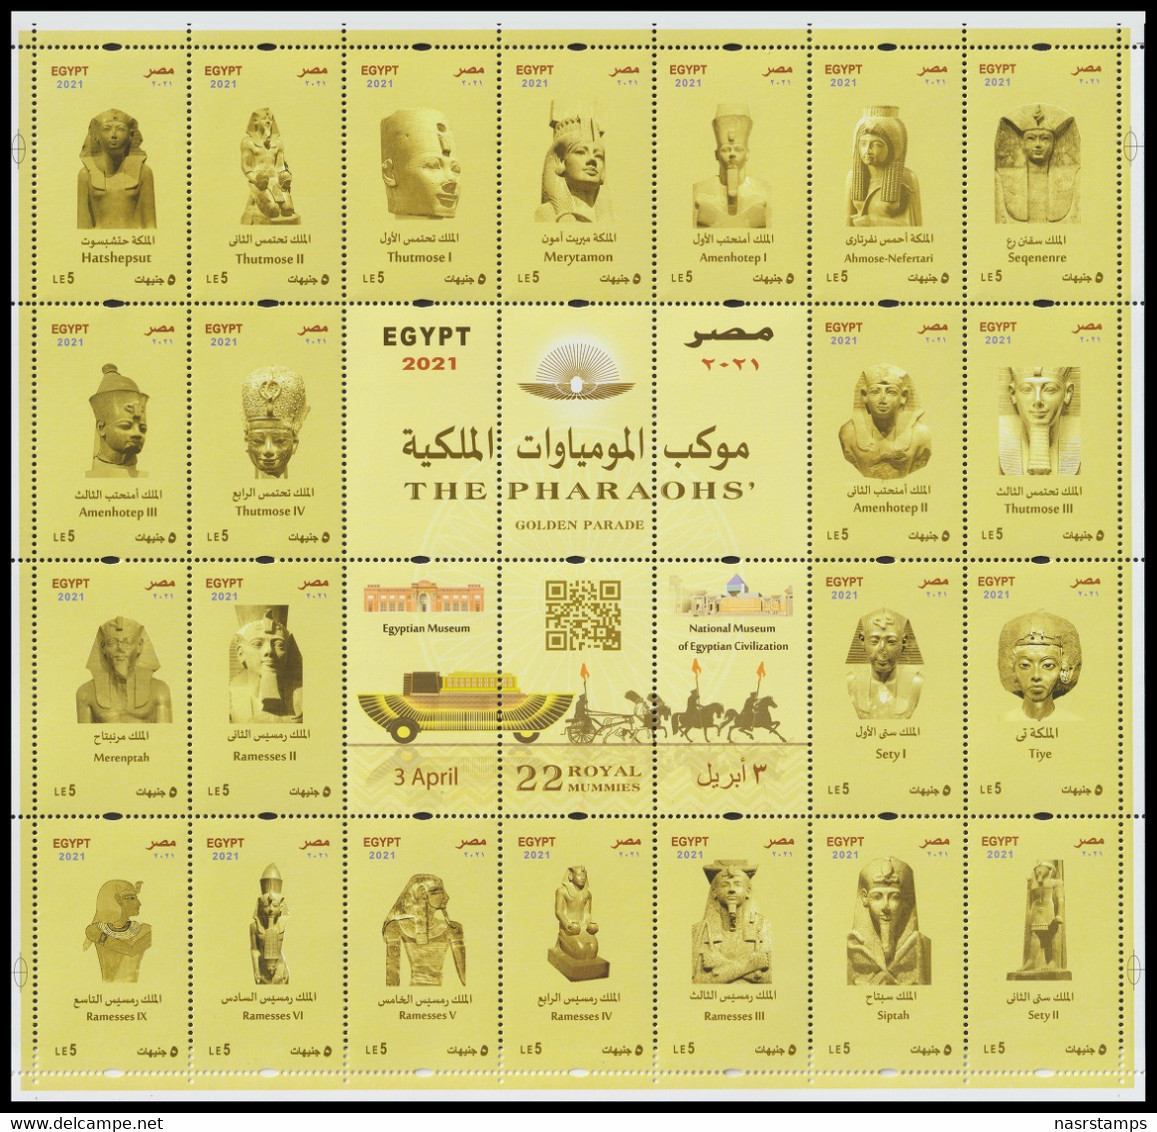 Egypt - 2021 - NEW - Mini Sheet - ( THE PHARAOHS Golden Parade - 3 April 2021 ) - MNH (**) - Nuevos